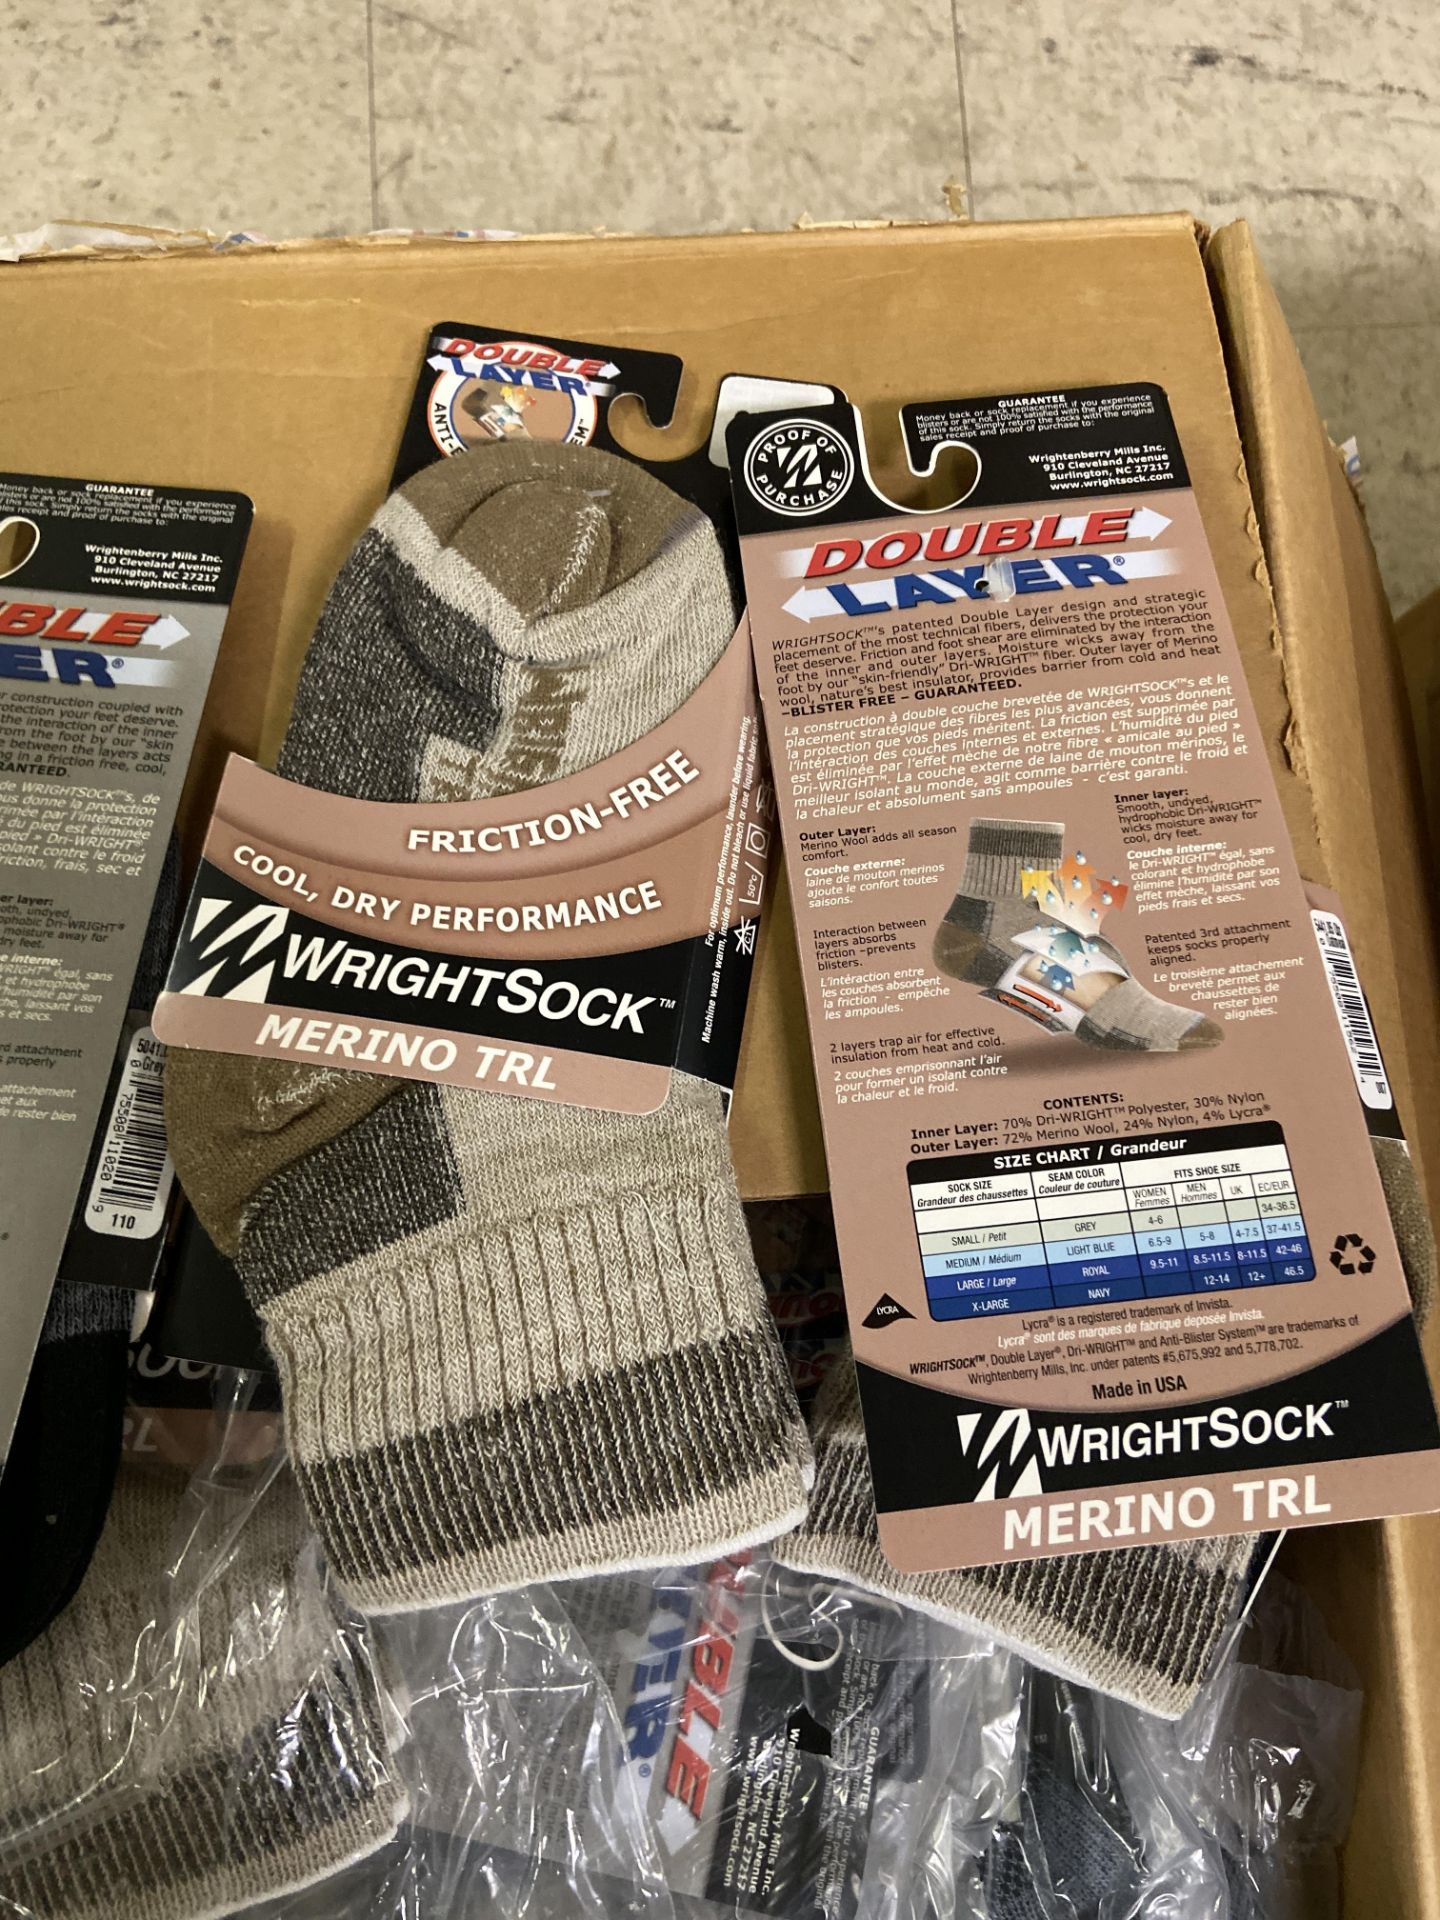 500+ packs of New Socks, Wrightsocks Various Styles, Various Colors - Image 4 of 6